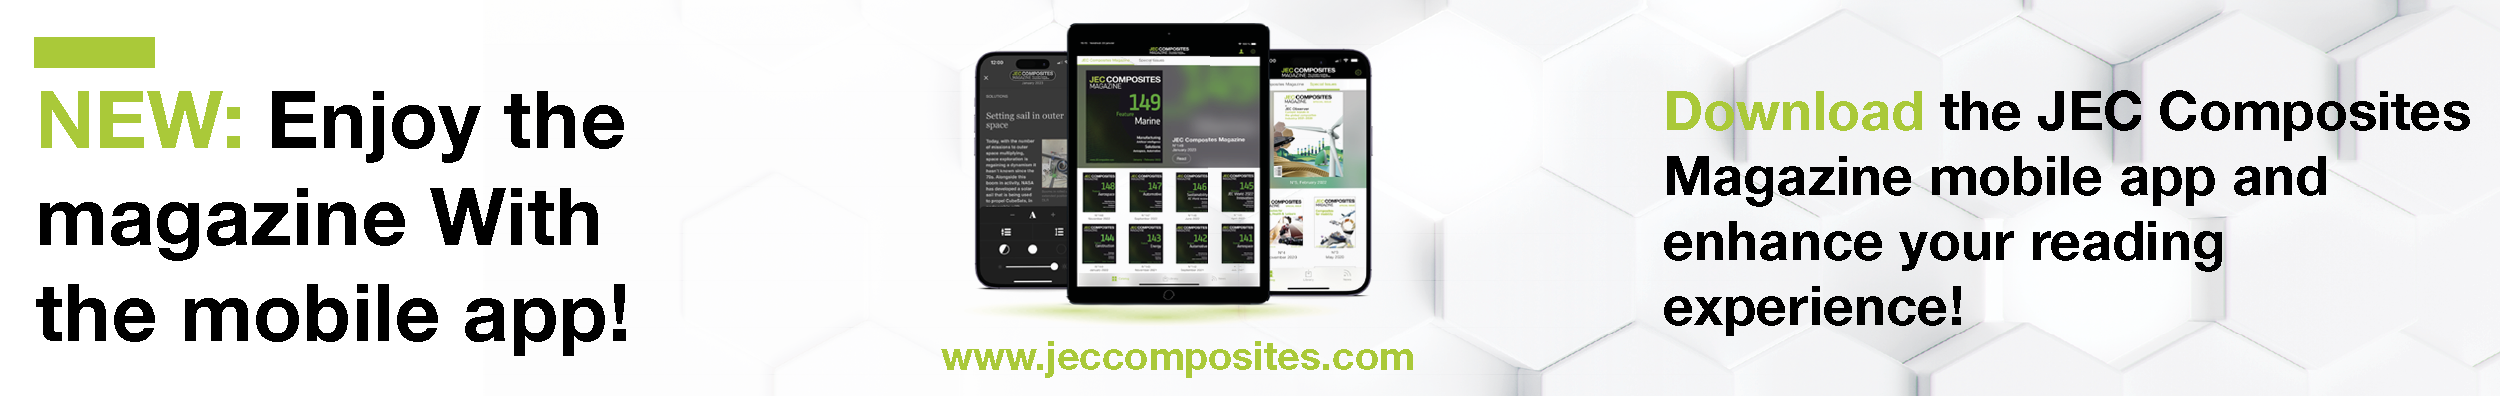 JEC Composites Magazine